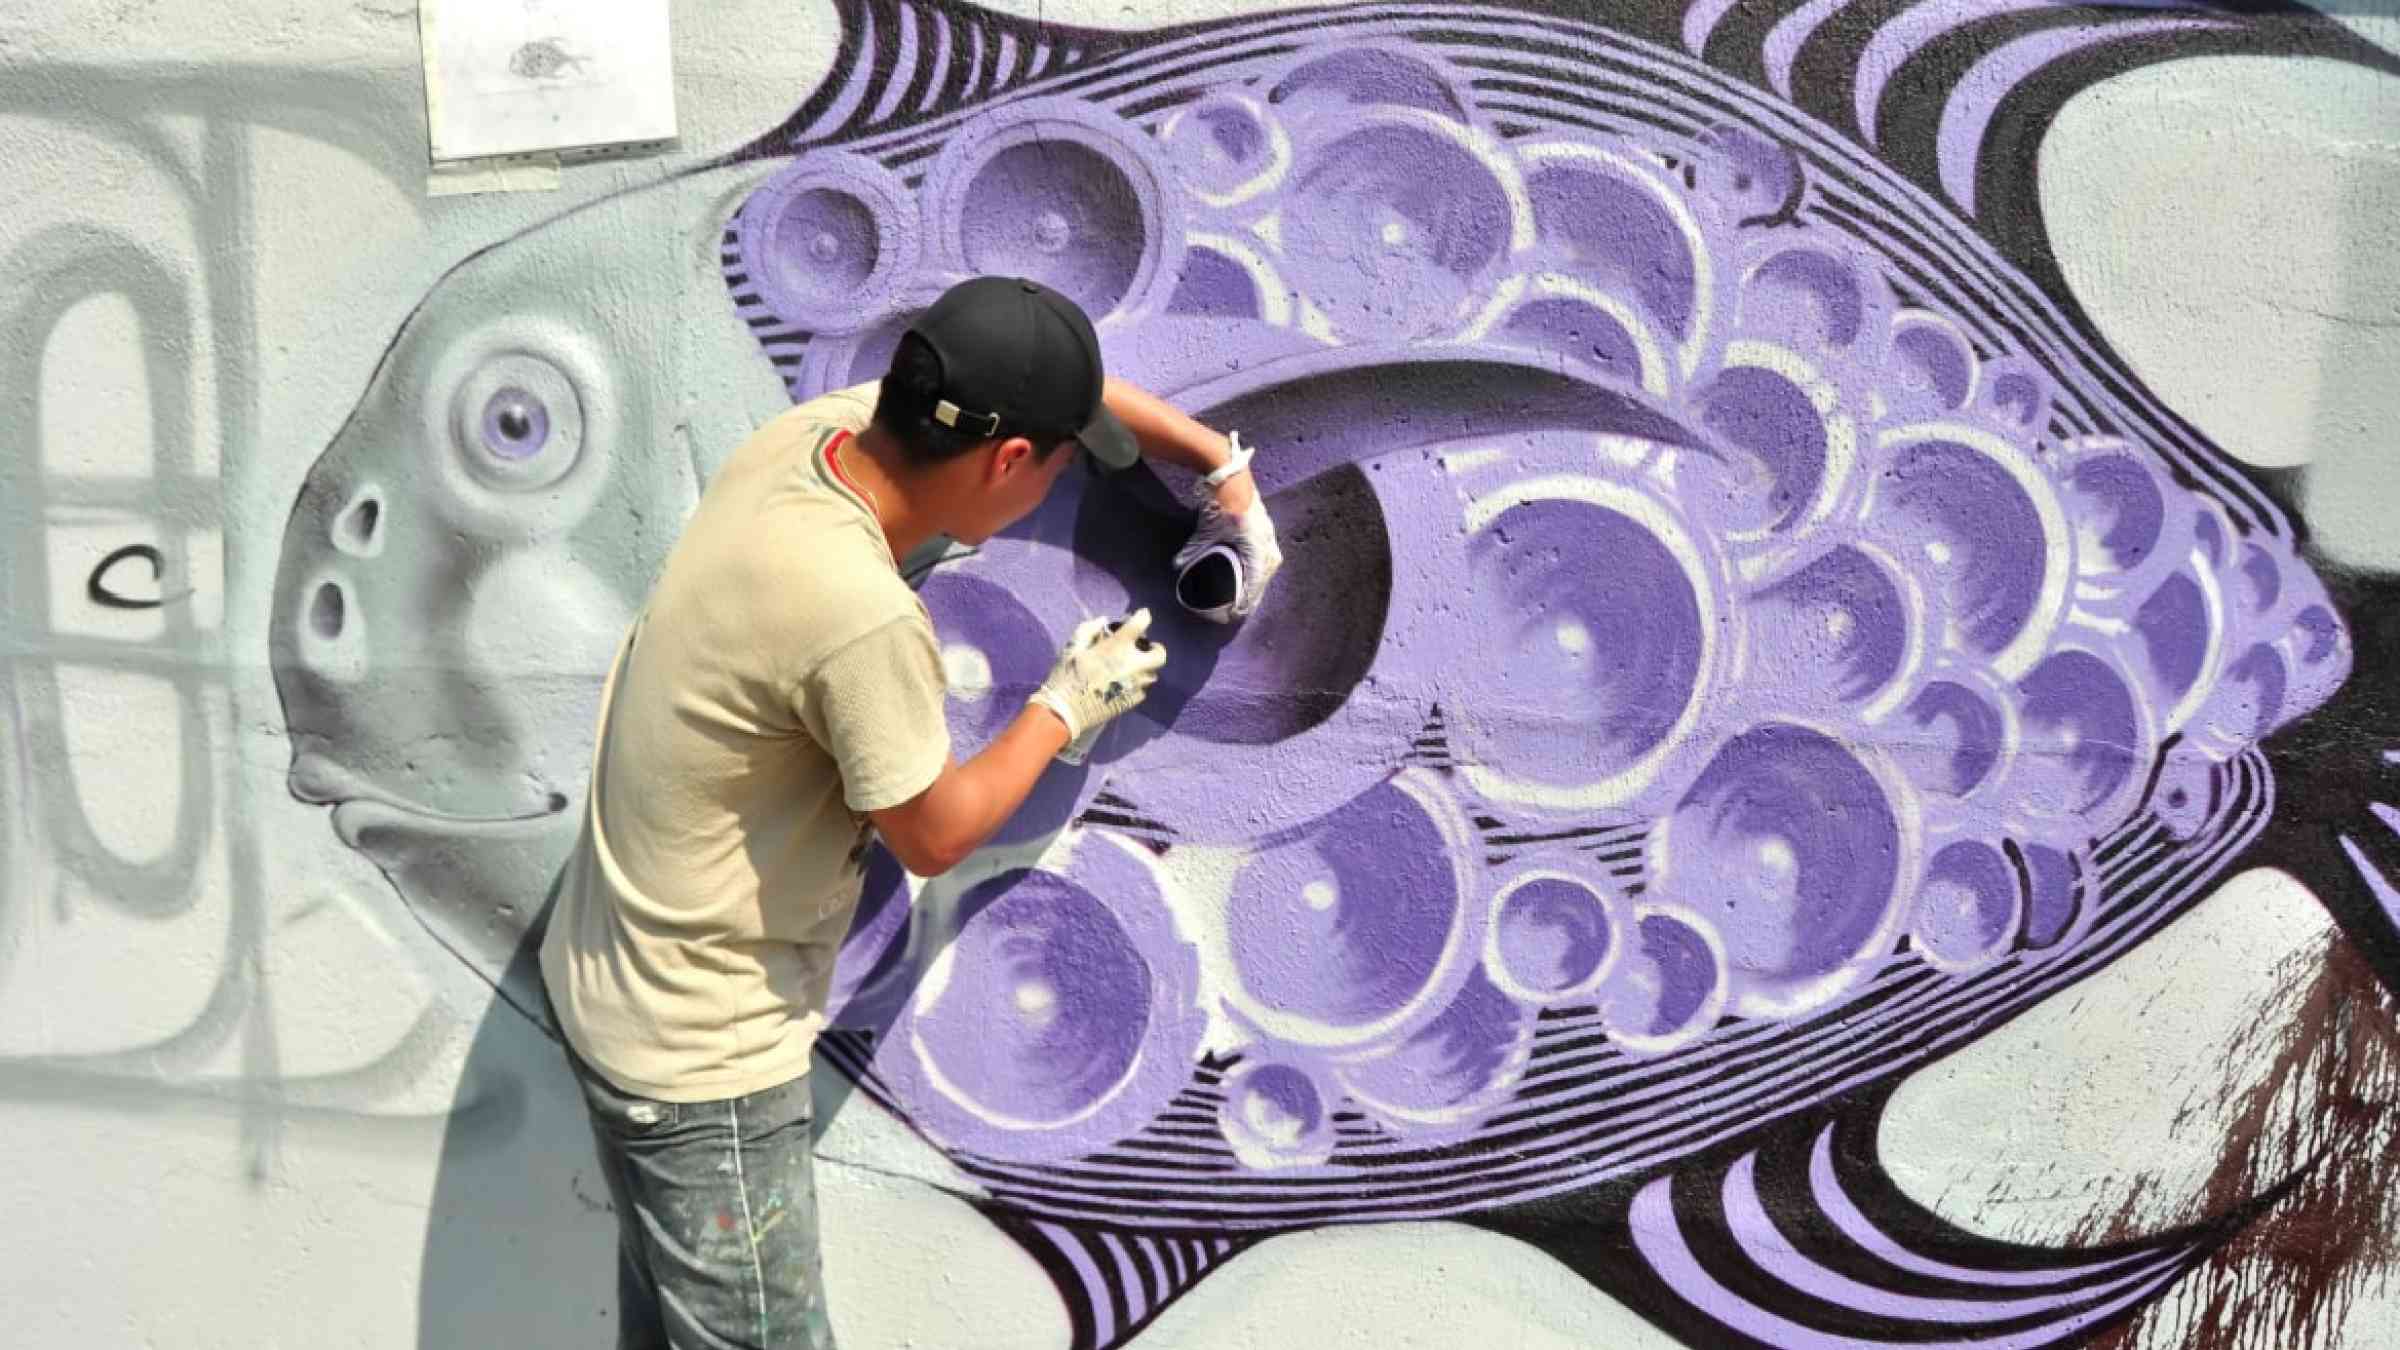 Graffiti artist painting a  purple fish to a wall.